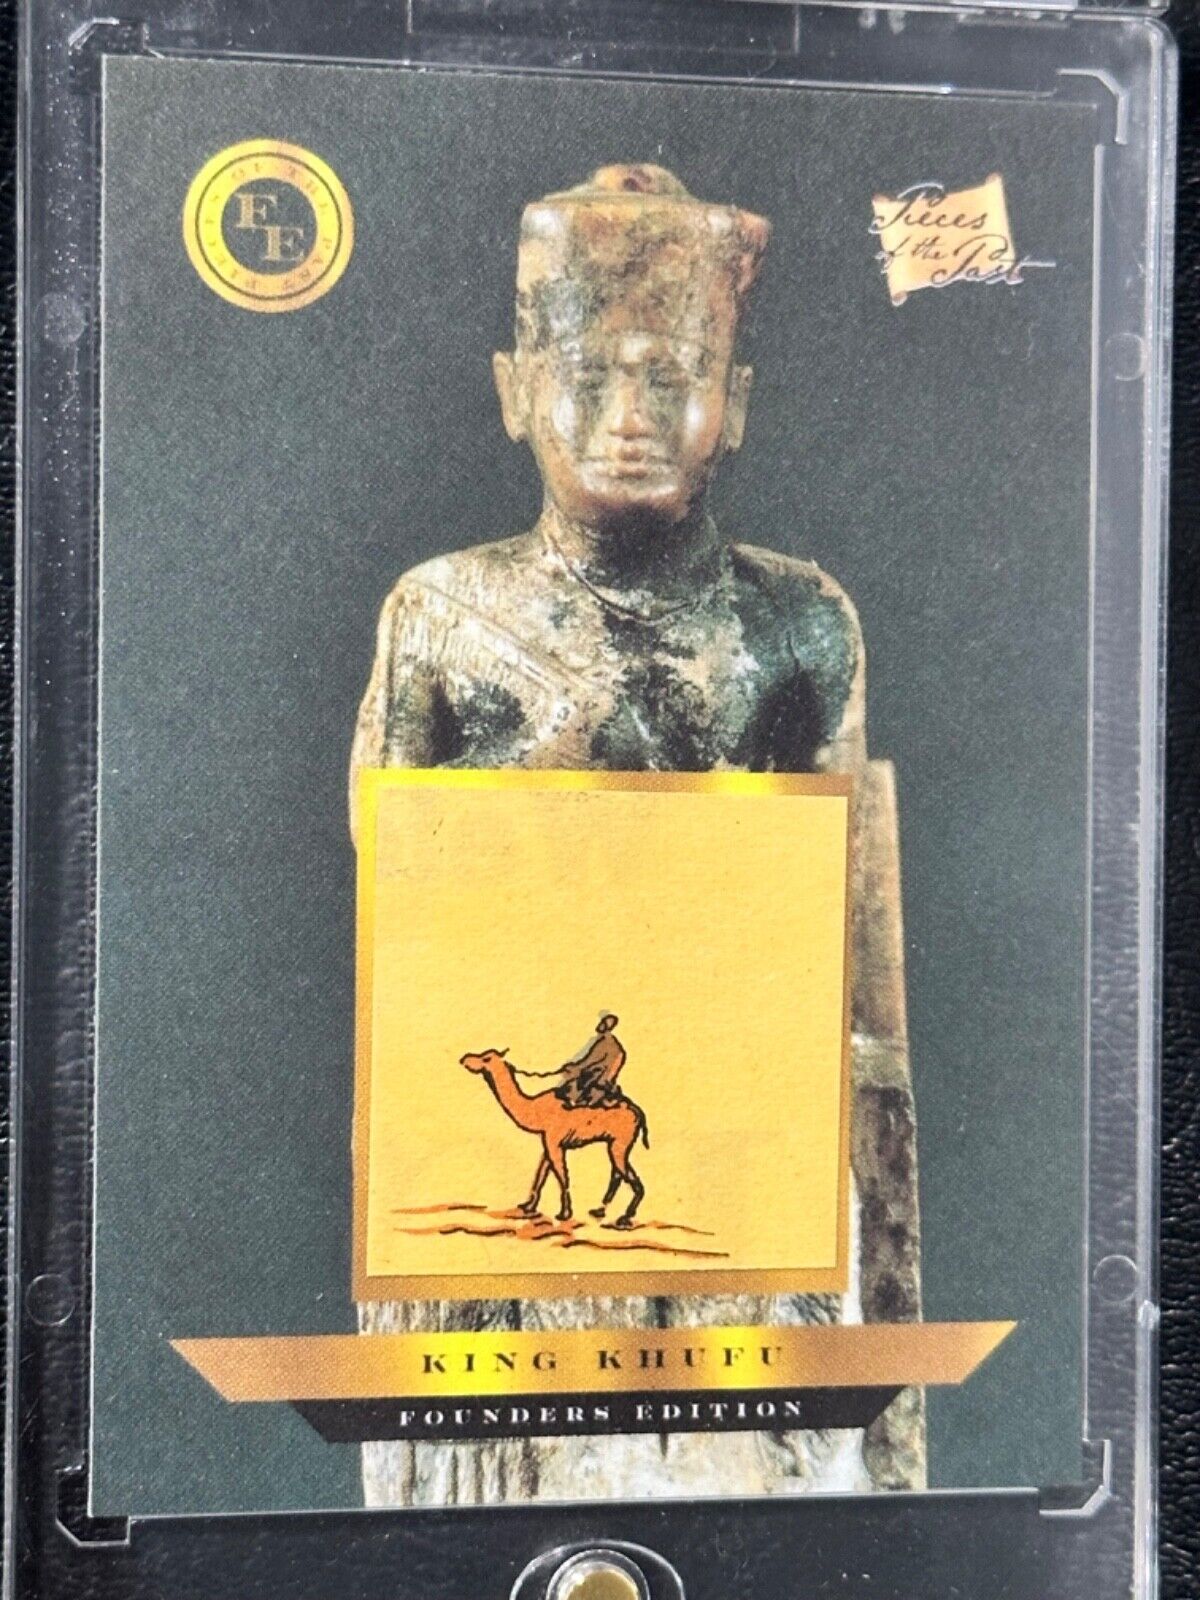 King Khufu - Very Rare \